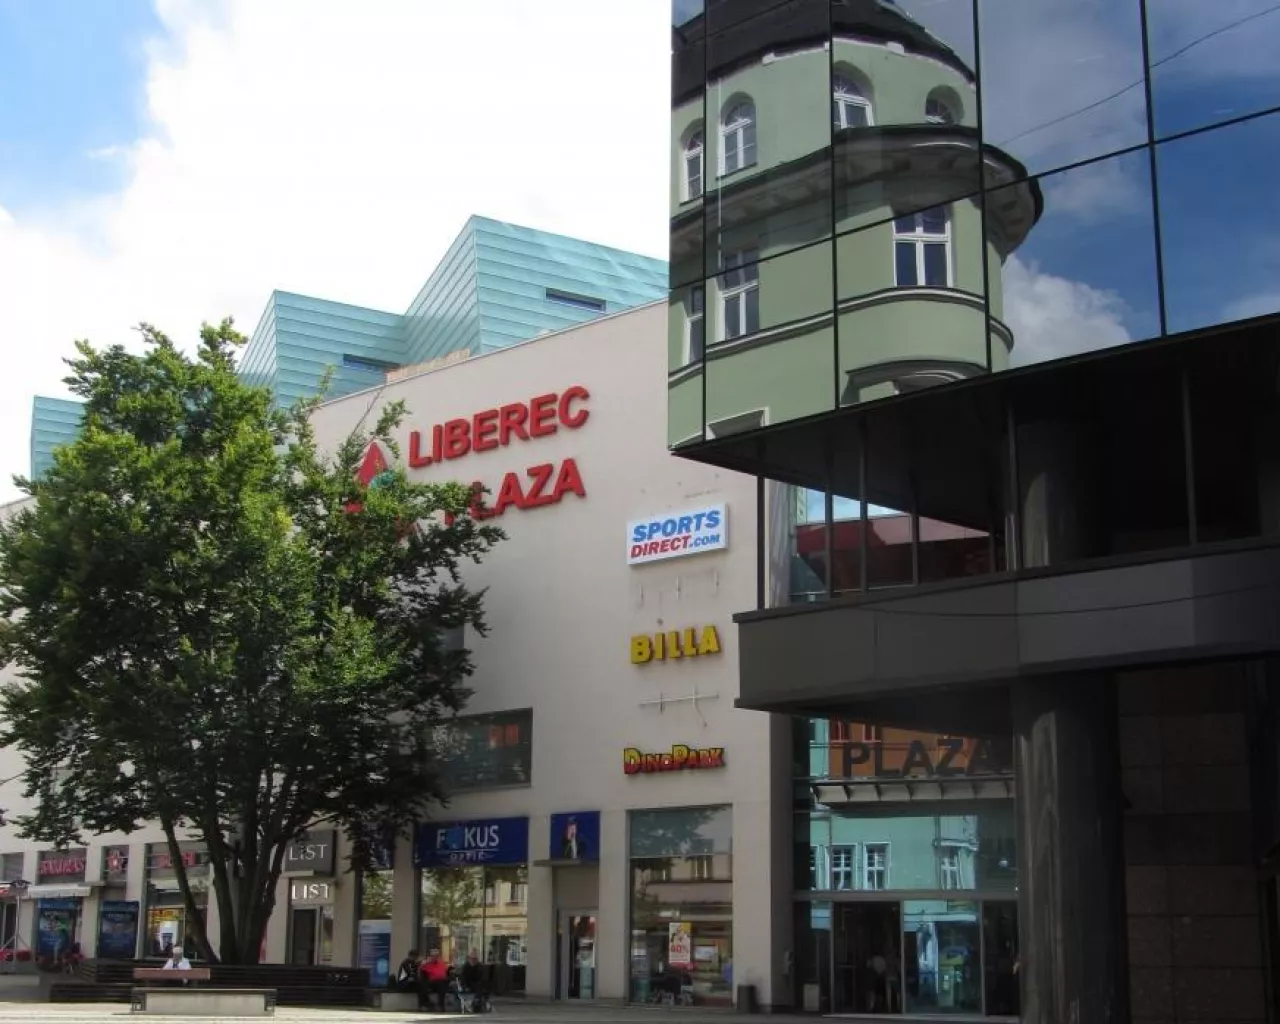 Centrum Handlowe w Libercu, 30 min. samochodem od polskiej granicy (fot KK)